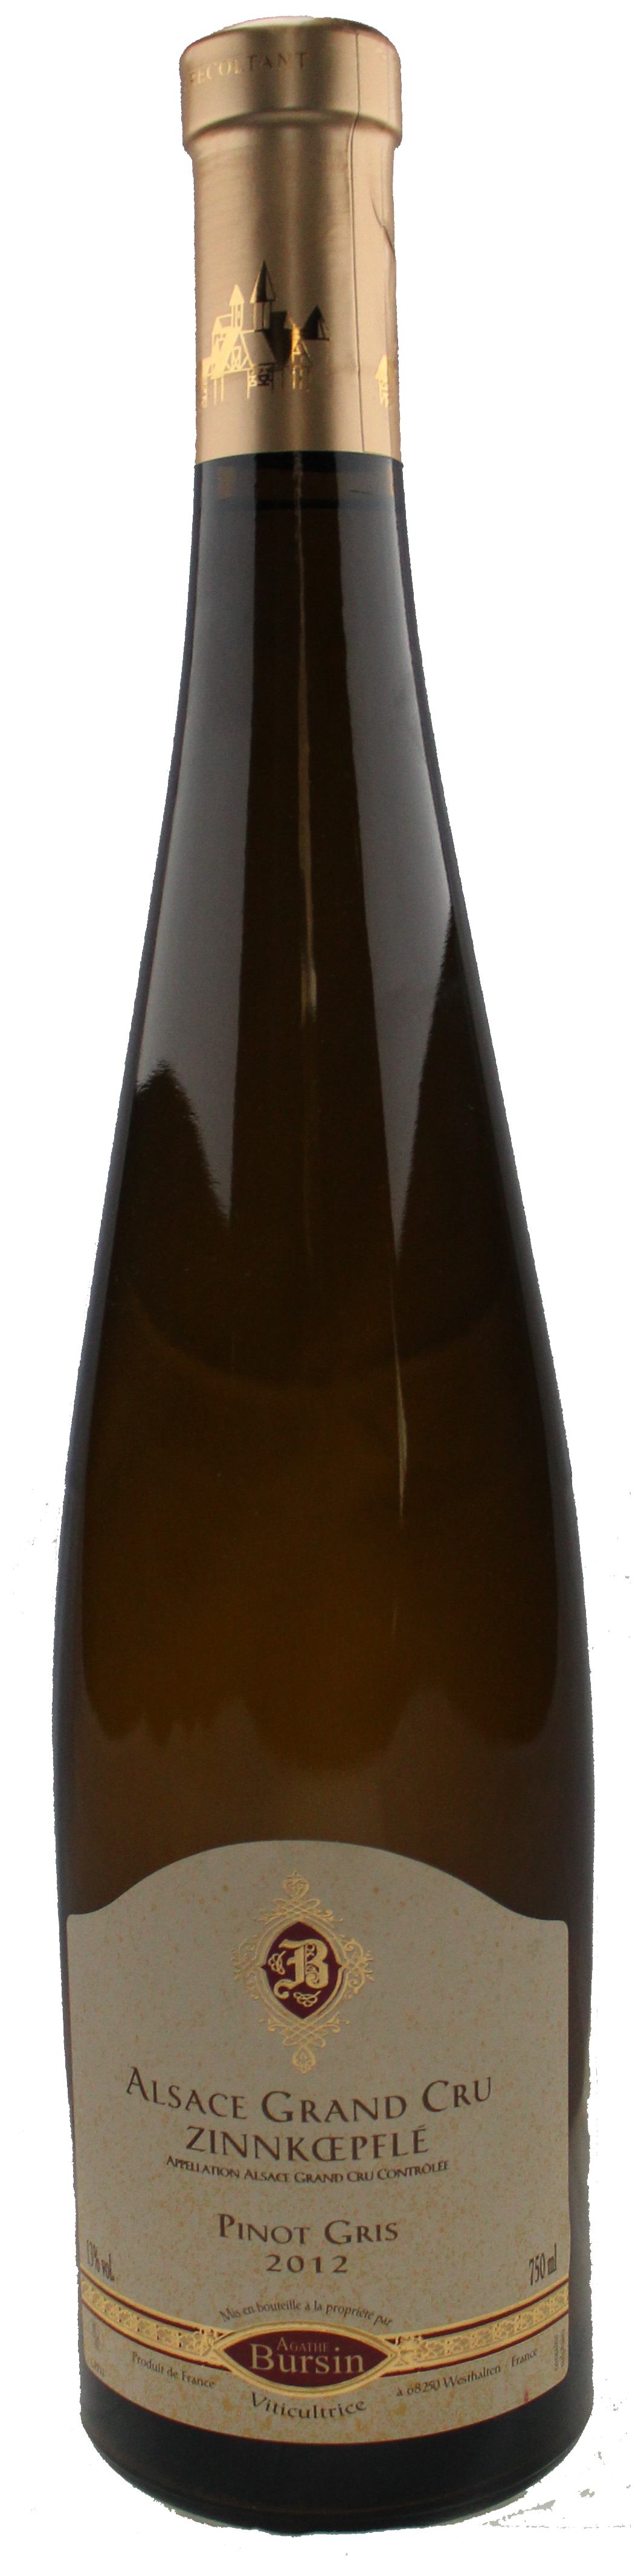 Bottle shot of 2014 Pinot Gris Grand Cru Zinnkoepfle